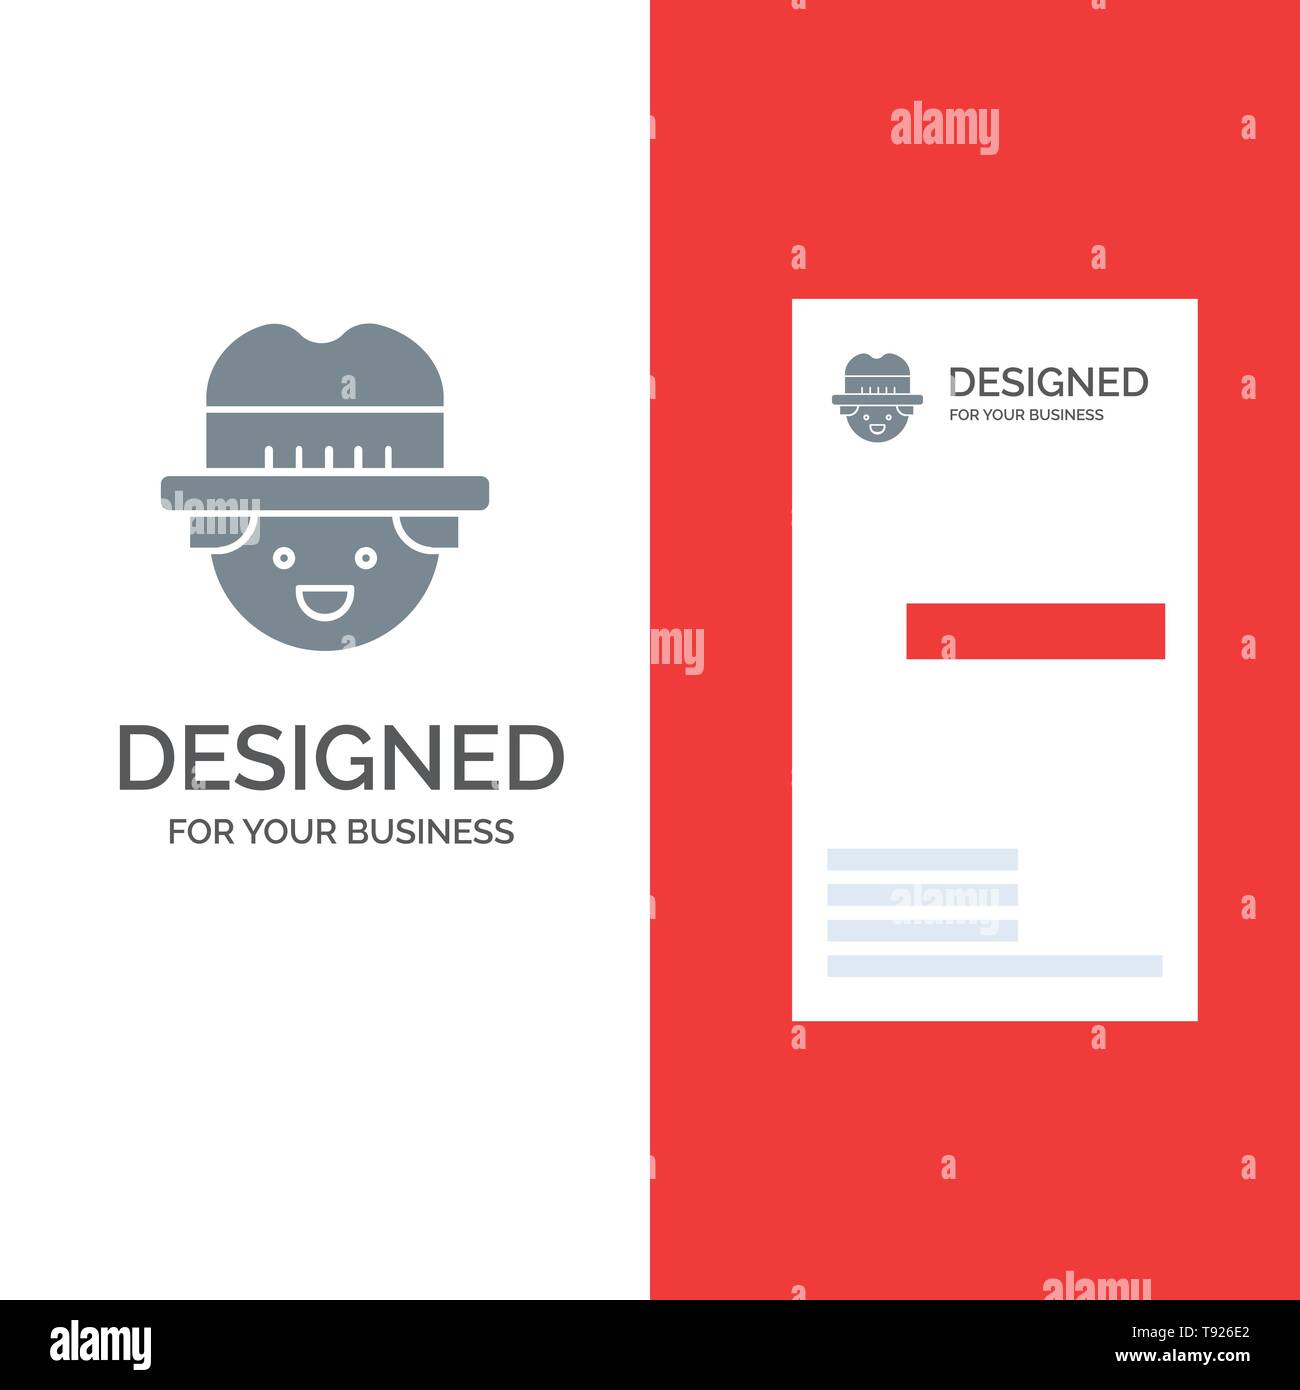 Bauern, Gärtner, Mann Grau Logo Design und Business Card Template In Gartner Business Cards Template